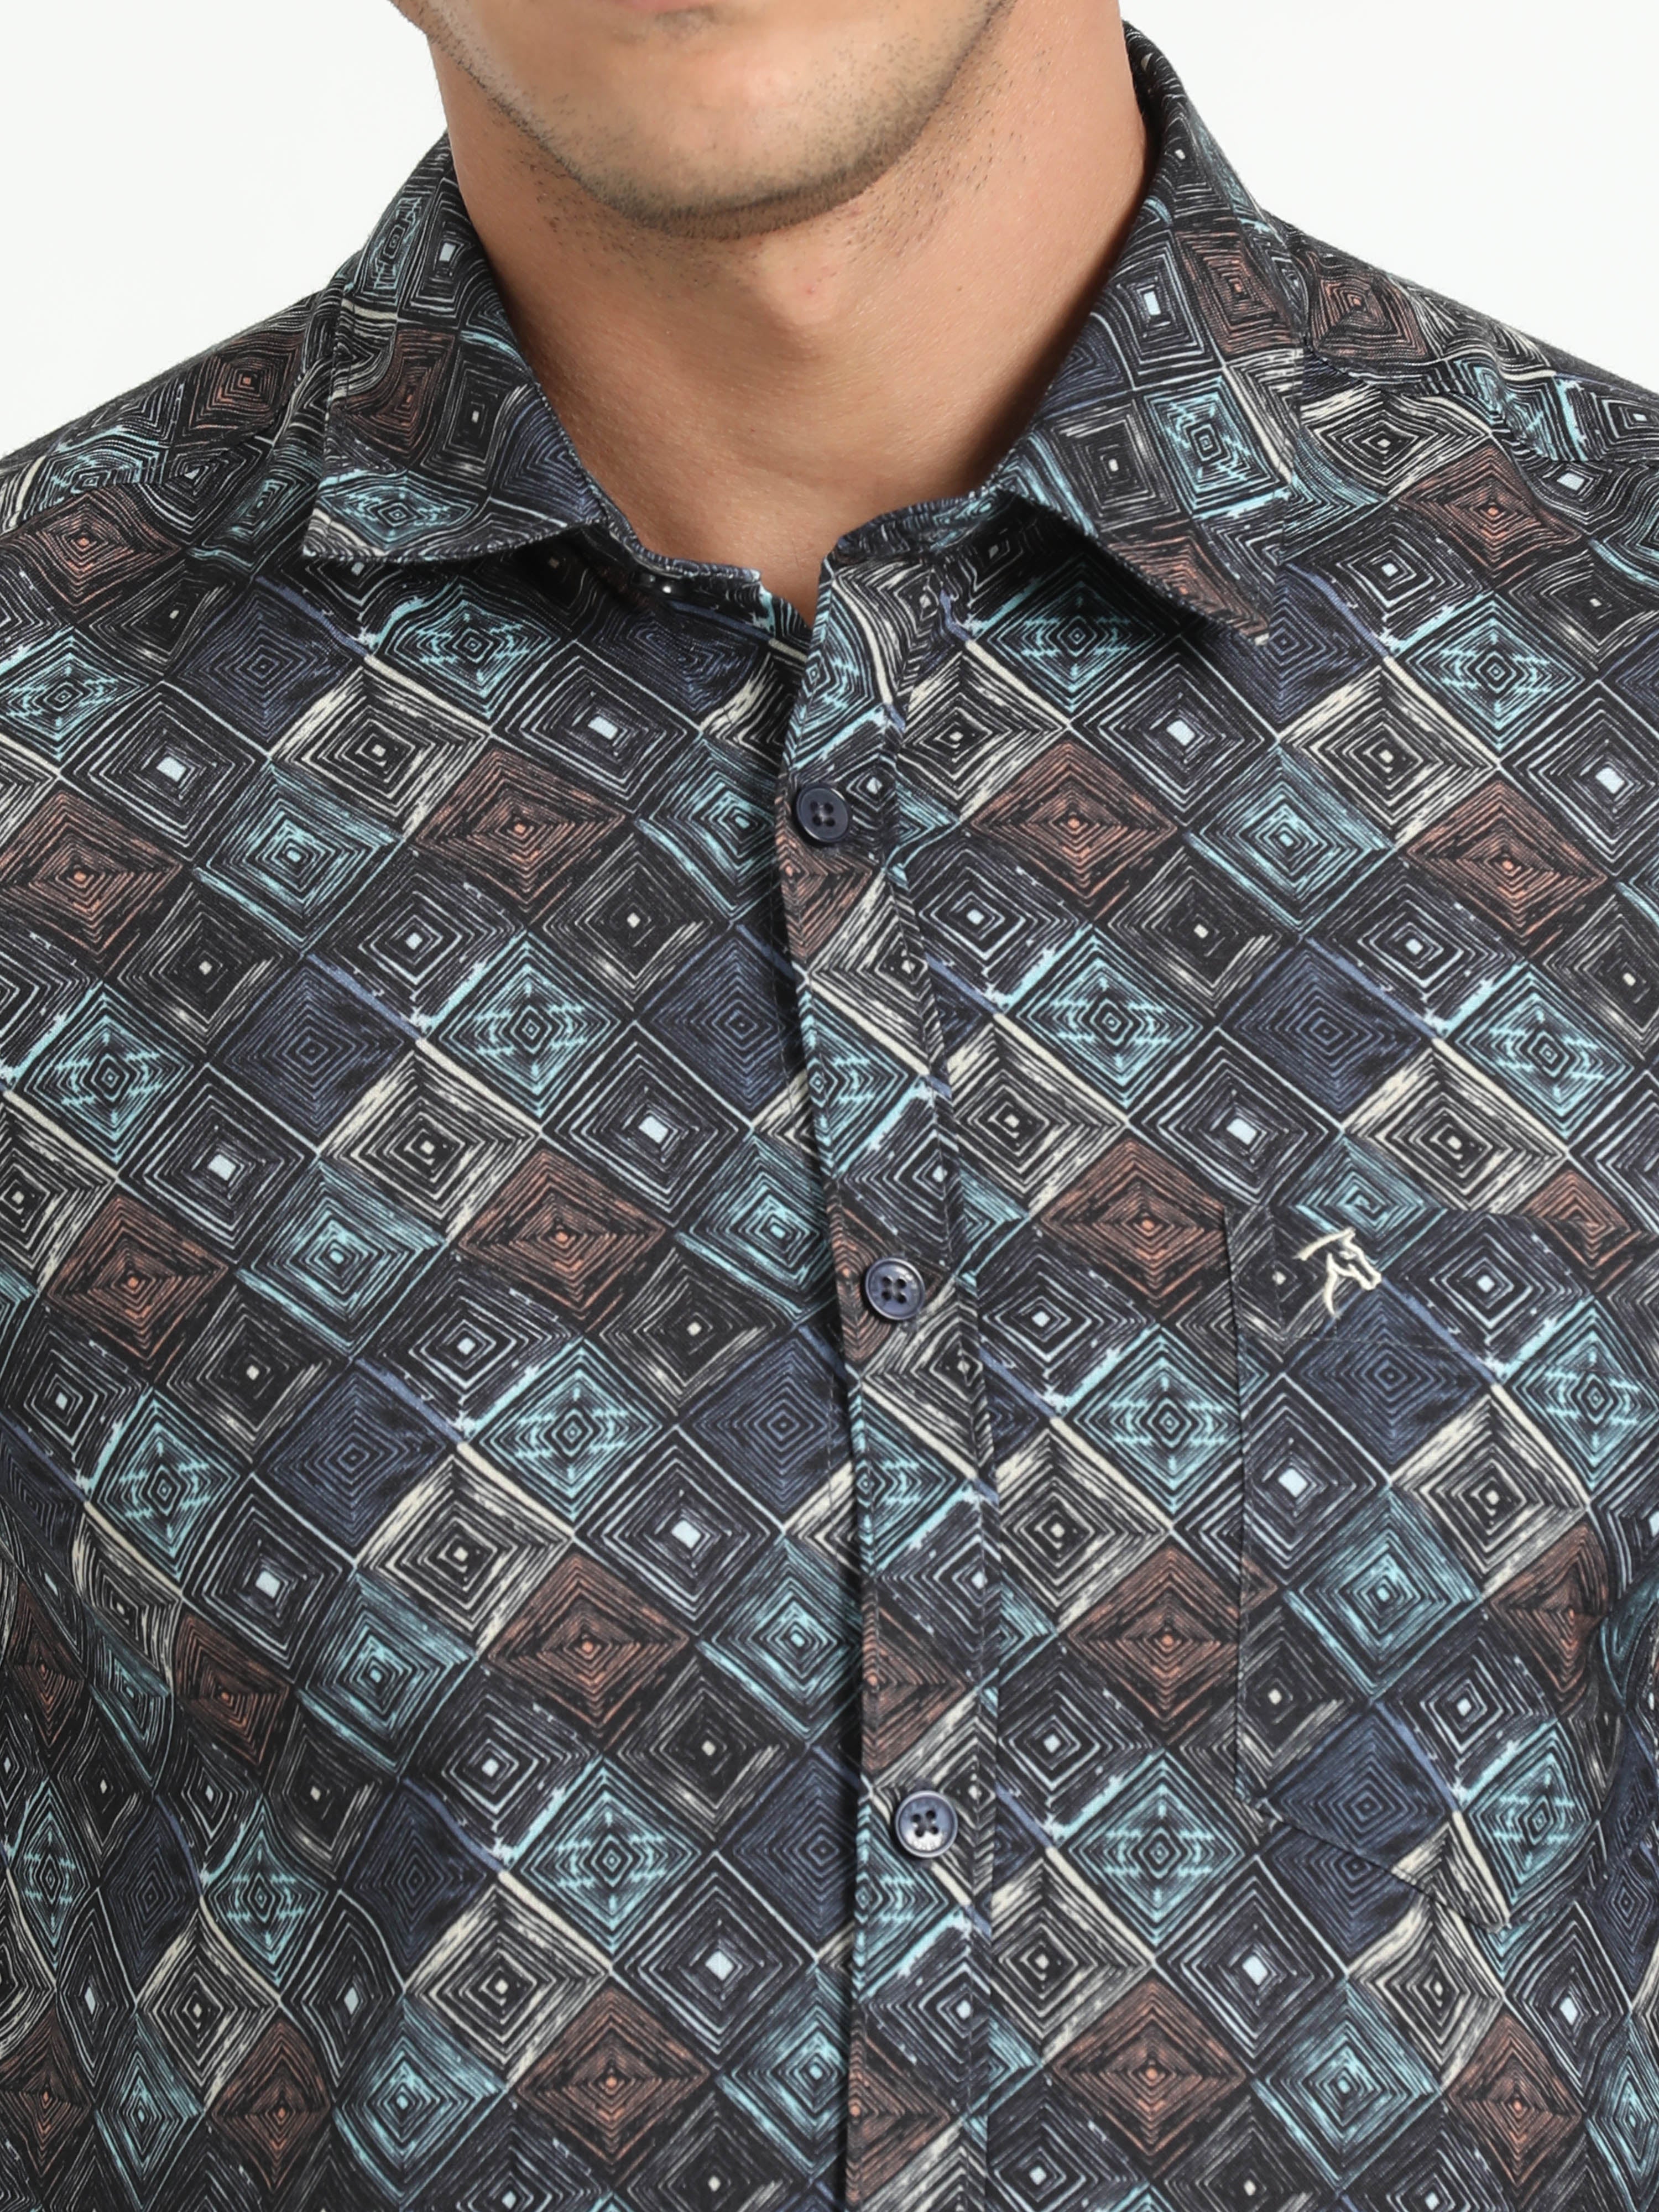 Cp Bro Men's Printed Multi Cotton Full Sleeve Woven Shirt | SBO2-94 A-FS-PRT-BSL